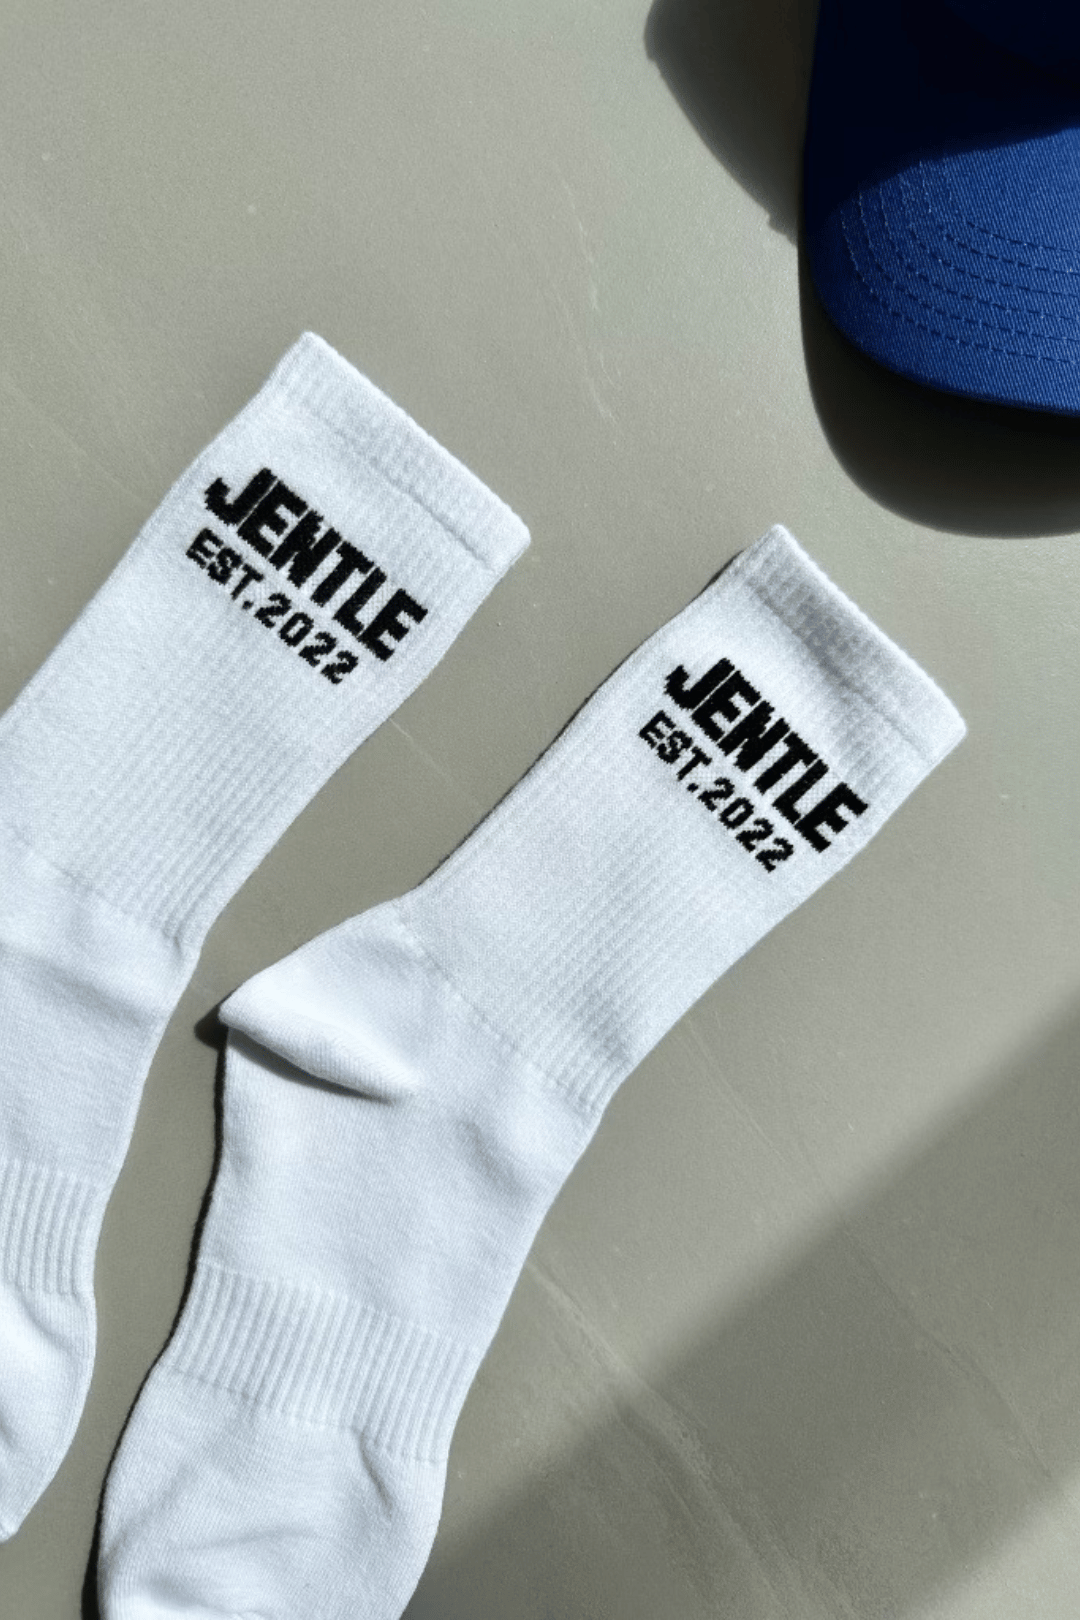 Jentle - Training Original Socks (White)